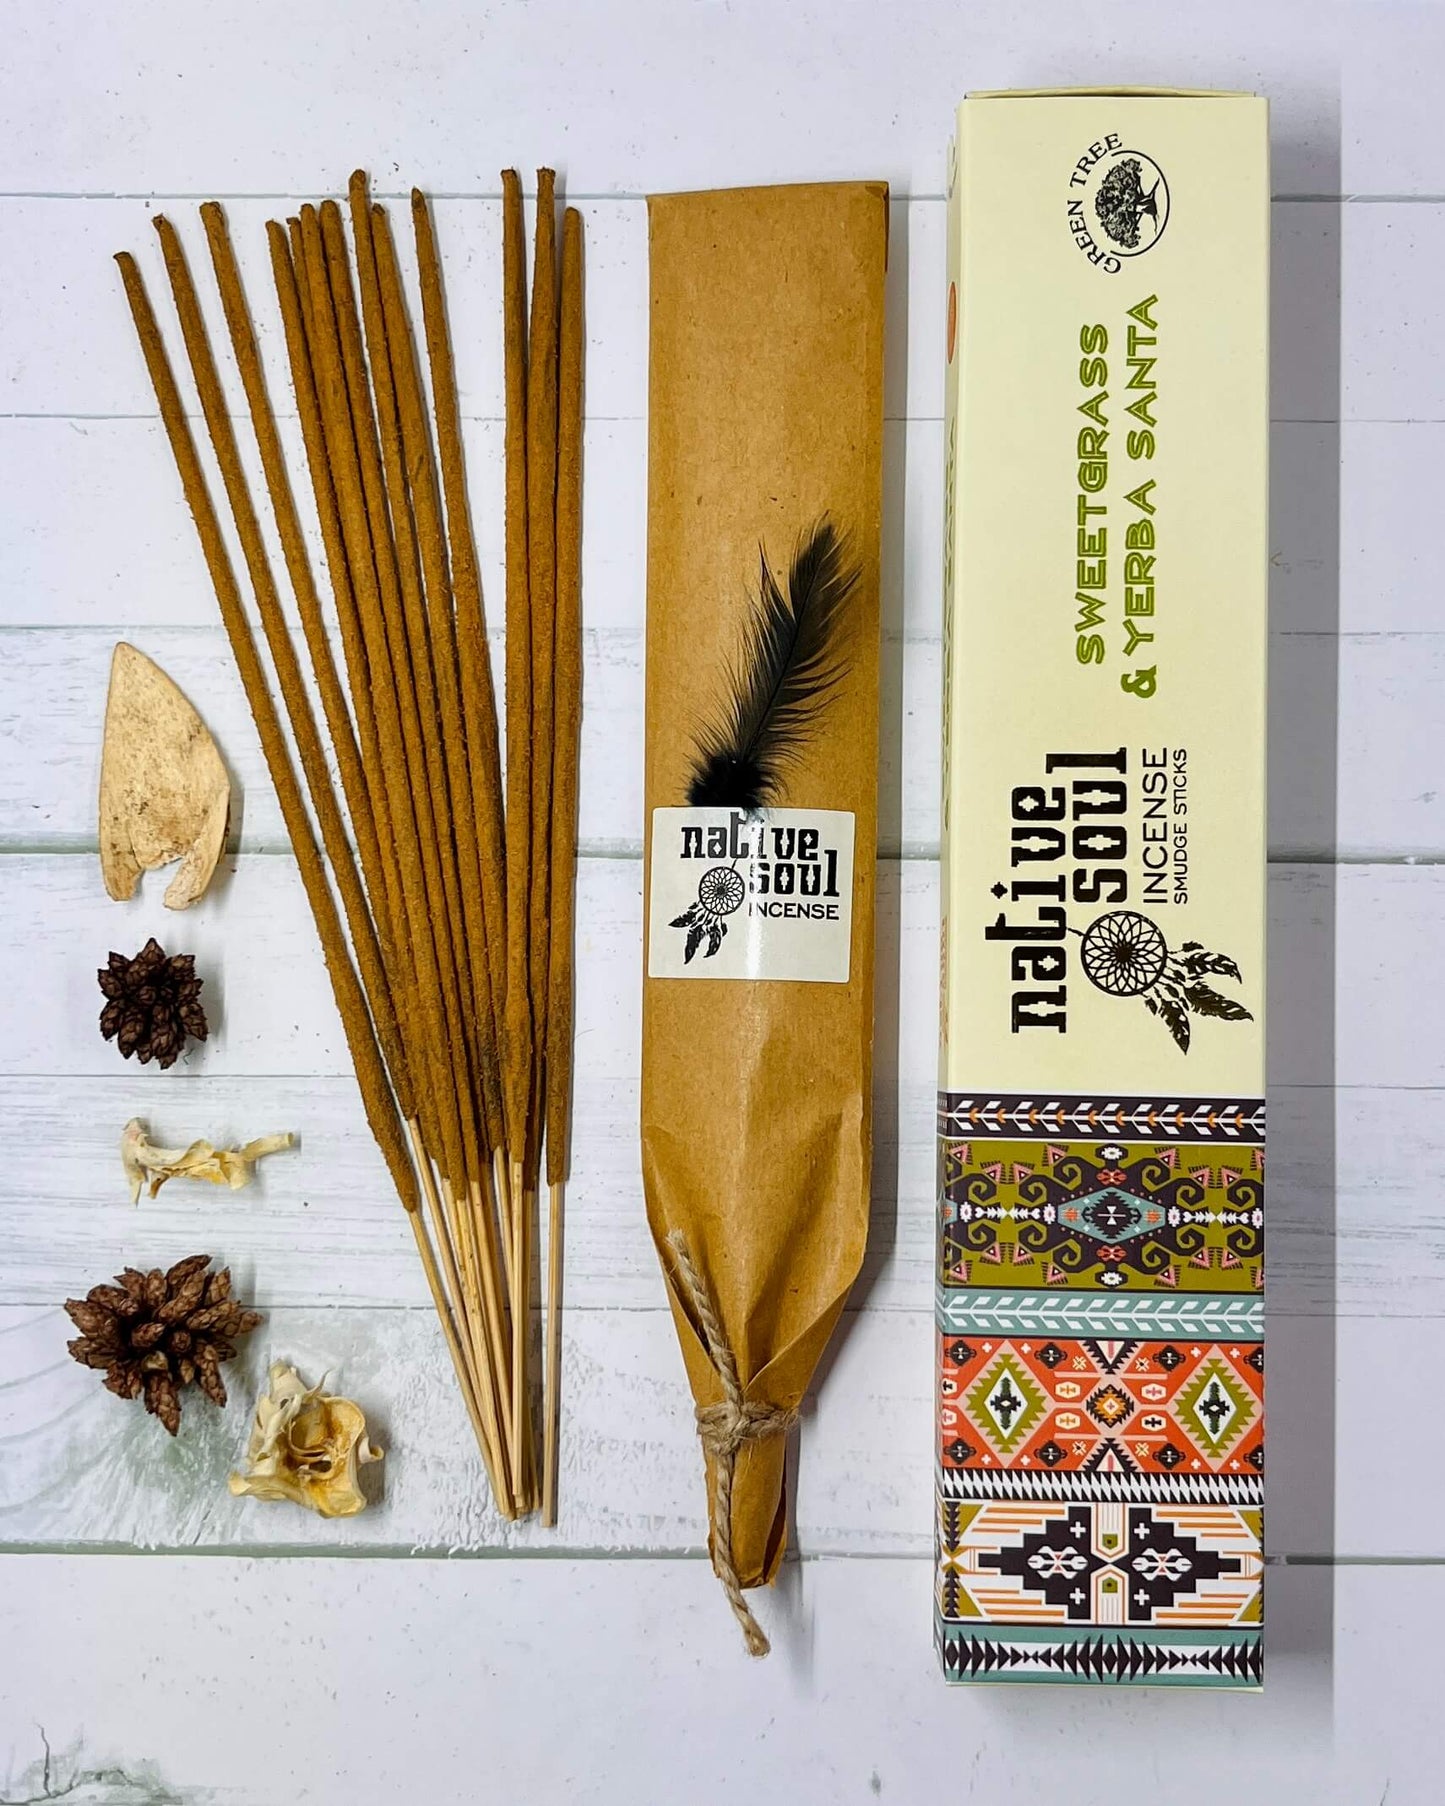 Native Soul Incense Smudge Sticks SWEET GRASS & YERBA SANTA